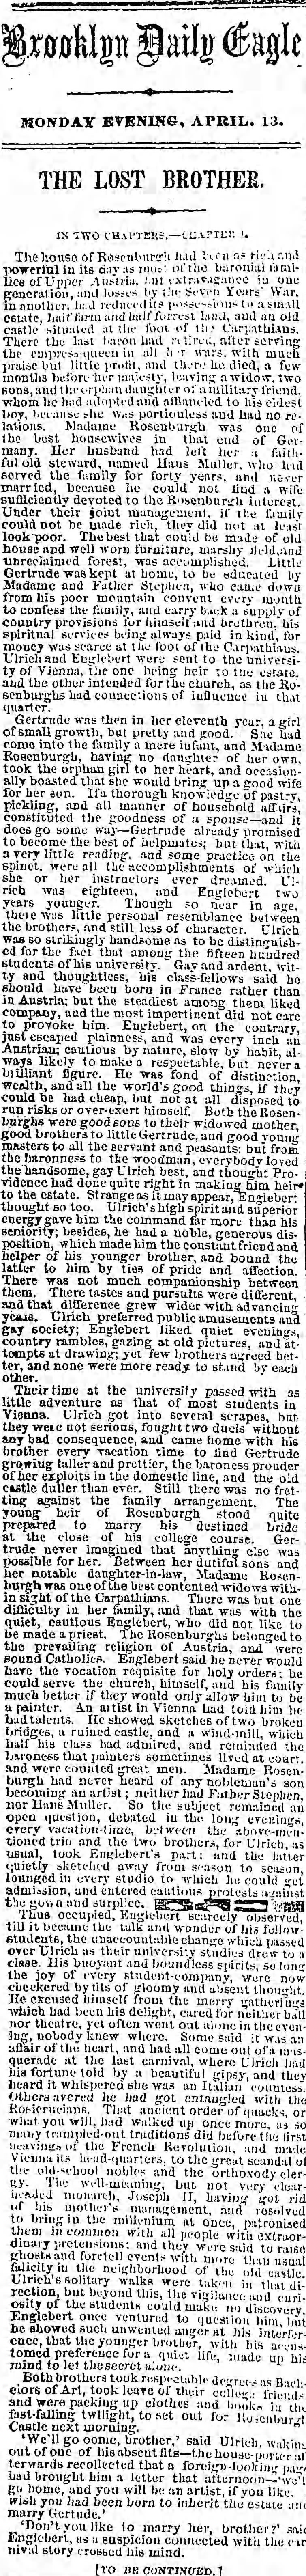 Rosenburgh Story in NYC paper circa 1863